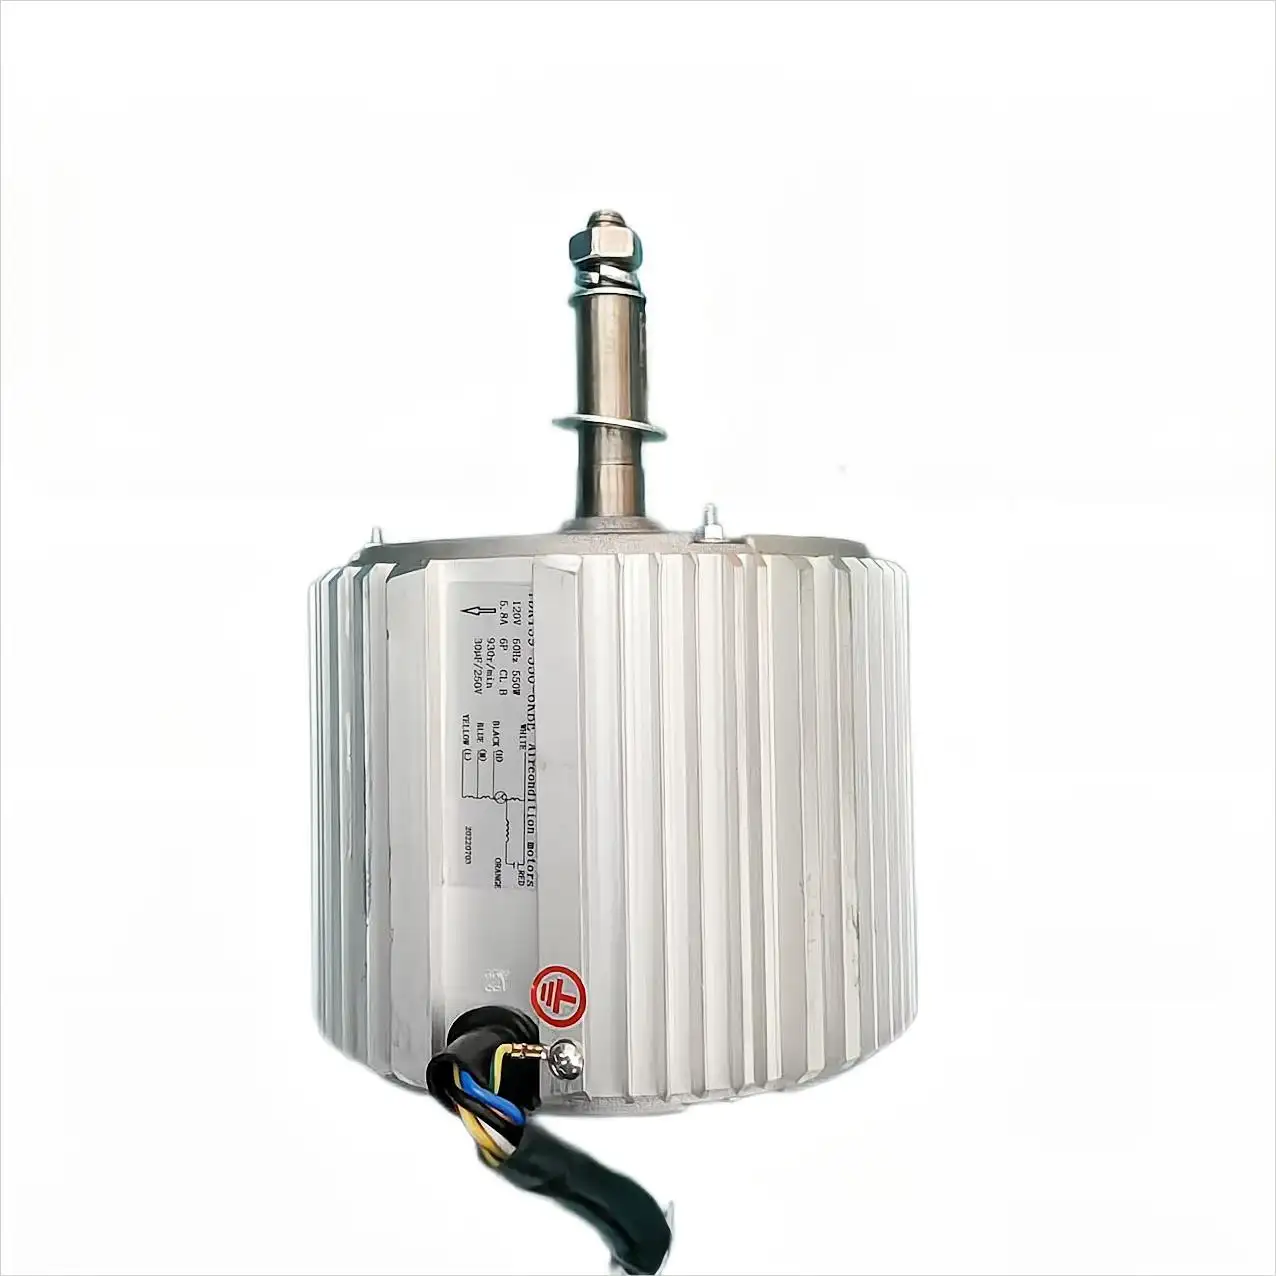 Ubey Air Cooler Welling Fan Motor high torque 180W 220V 50Hz single phase ac fan portable eveporative air cooler motor